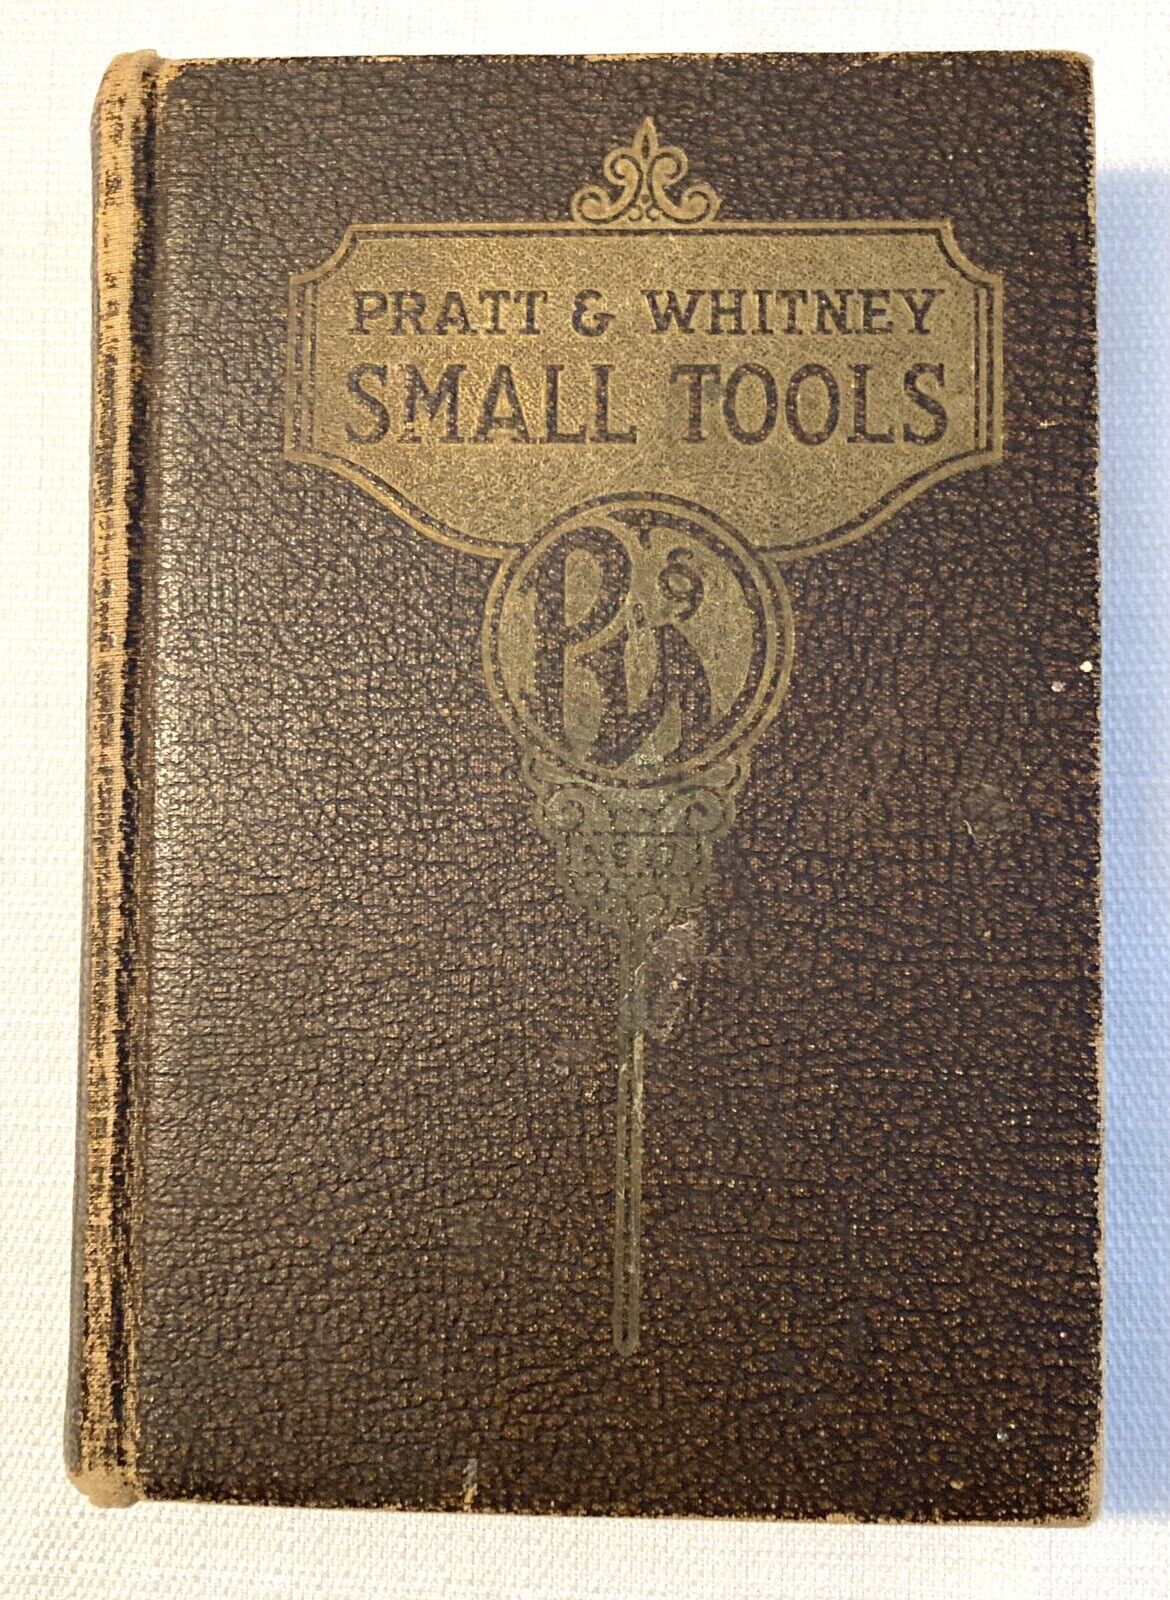 Pratt & Whitney 1950 Small Tools Catalog Canada #17 Hardcover Illustrated